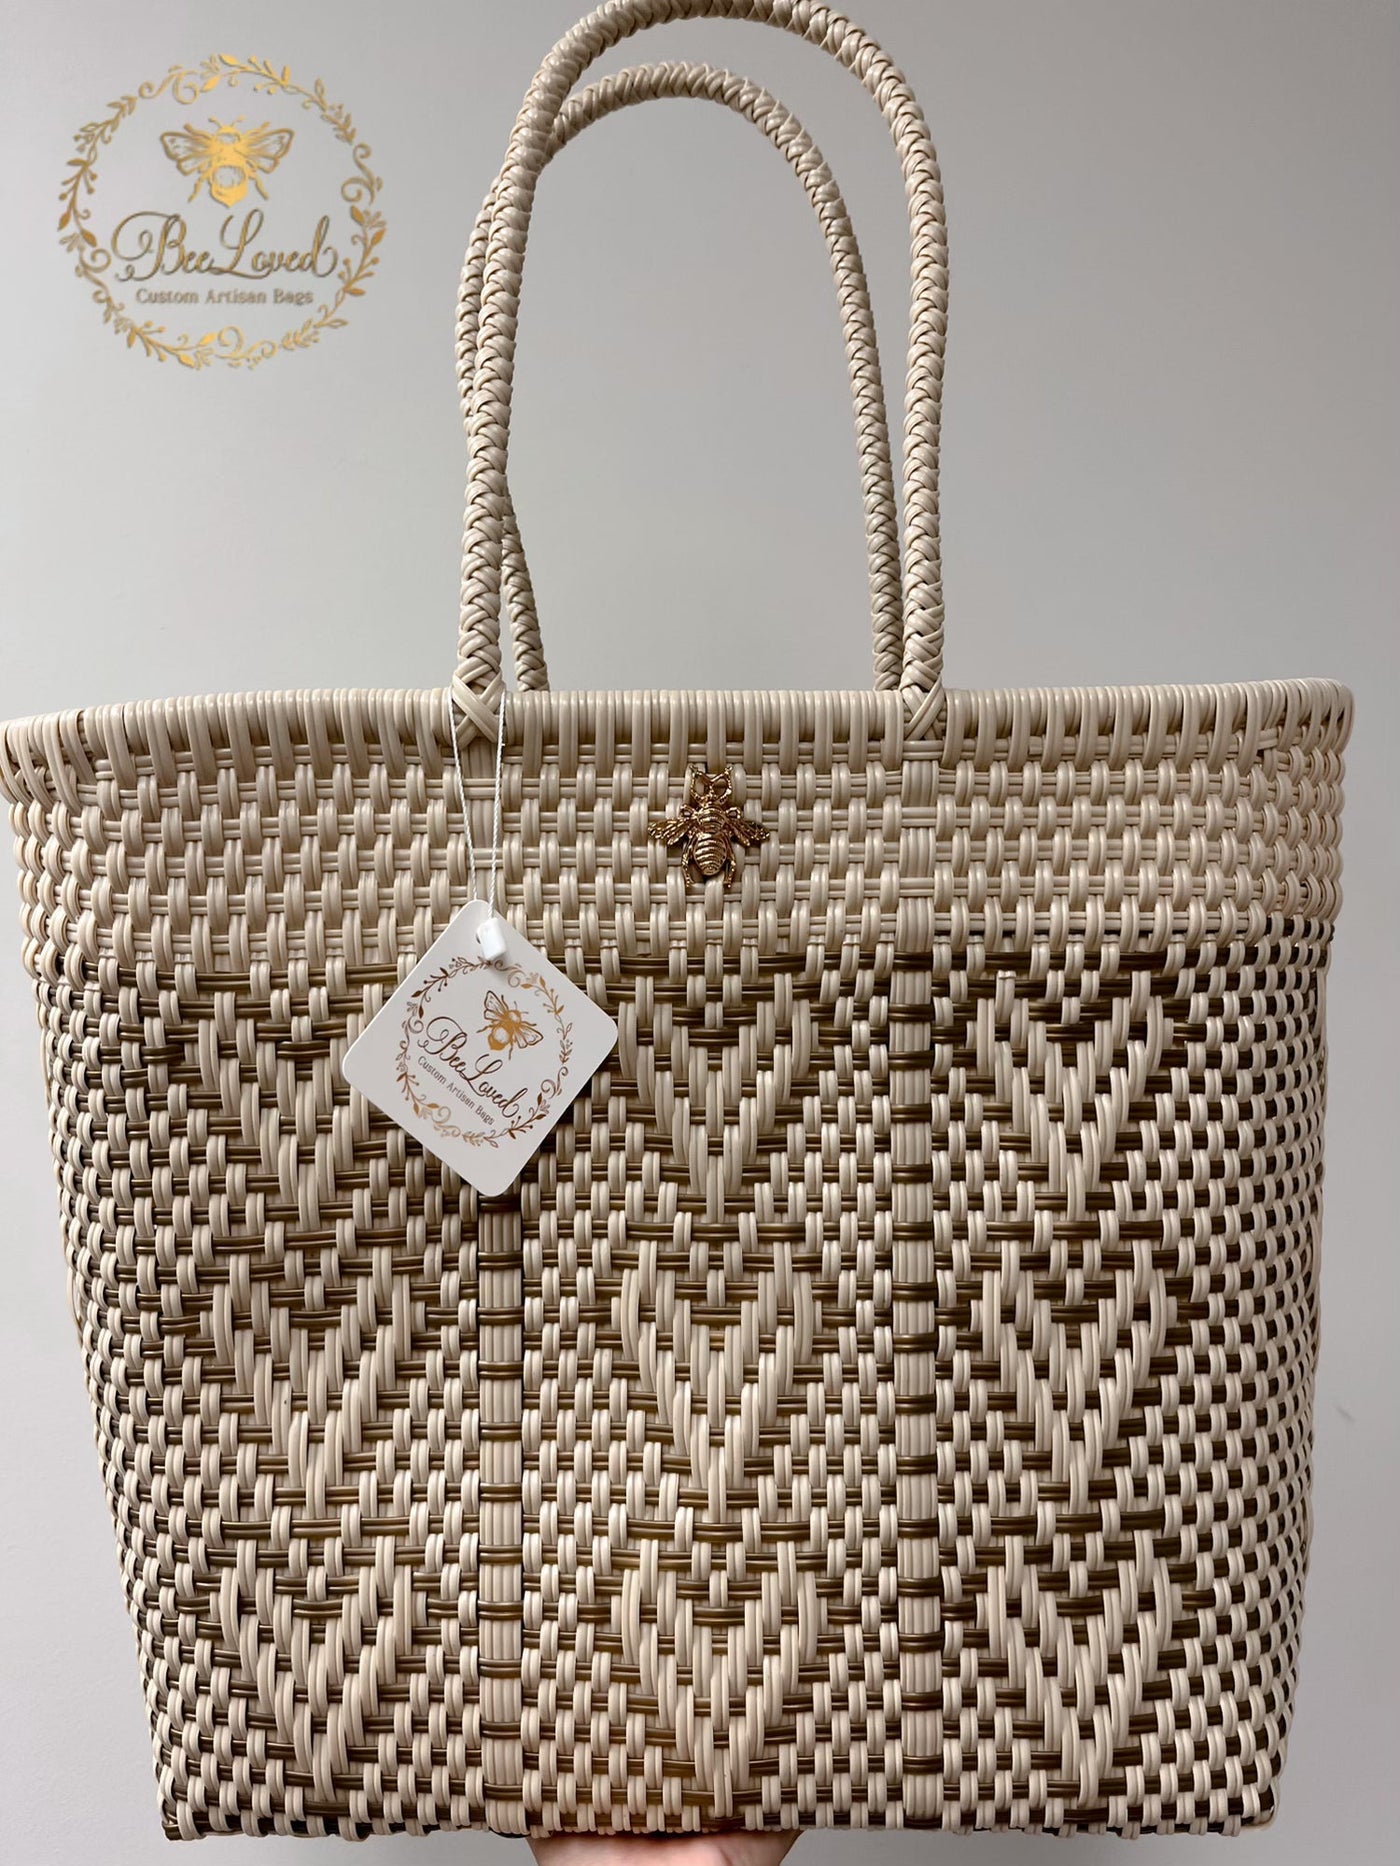 BeeLoved Custom Artisan Bags and Gifts Handbags Medium Cream Hearts Beech Bag